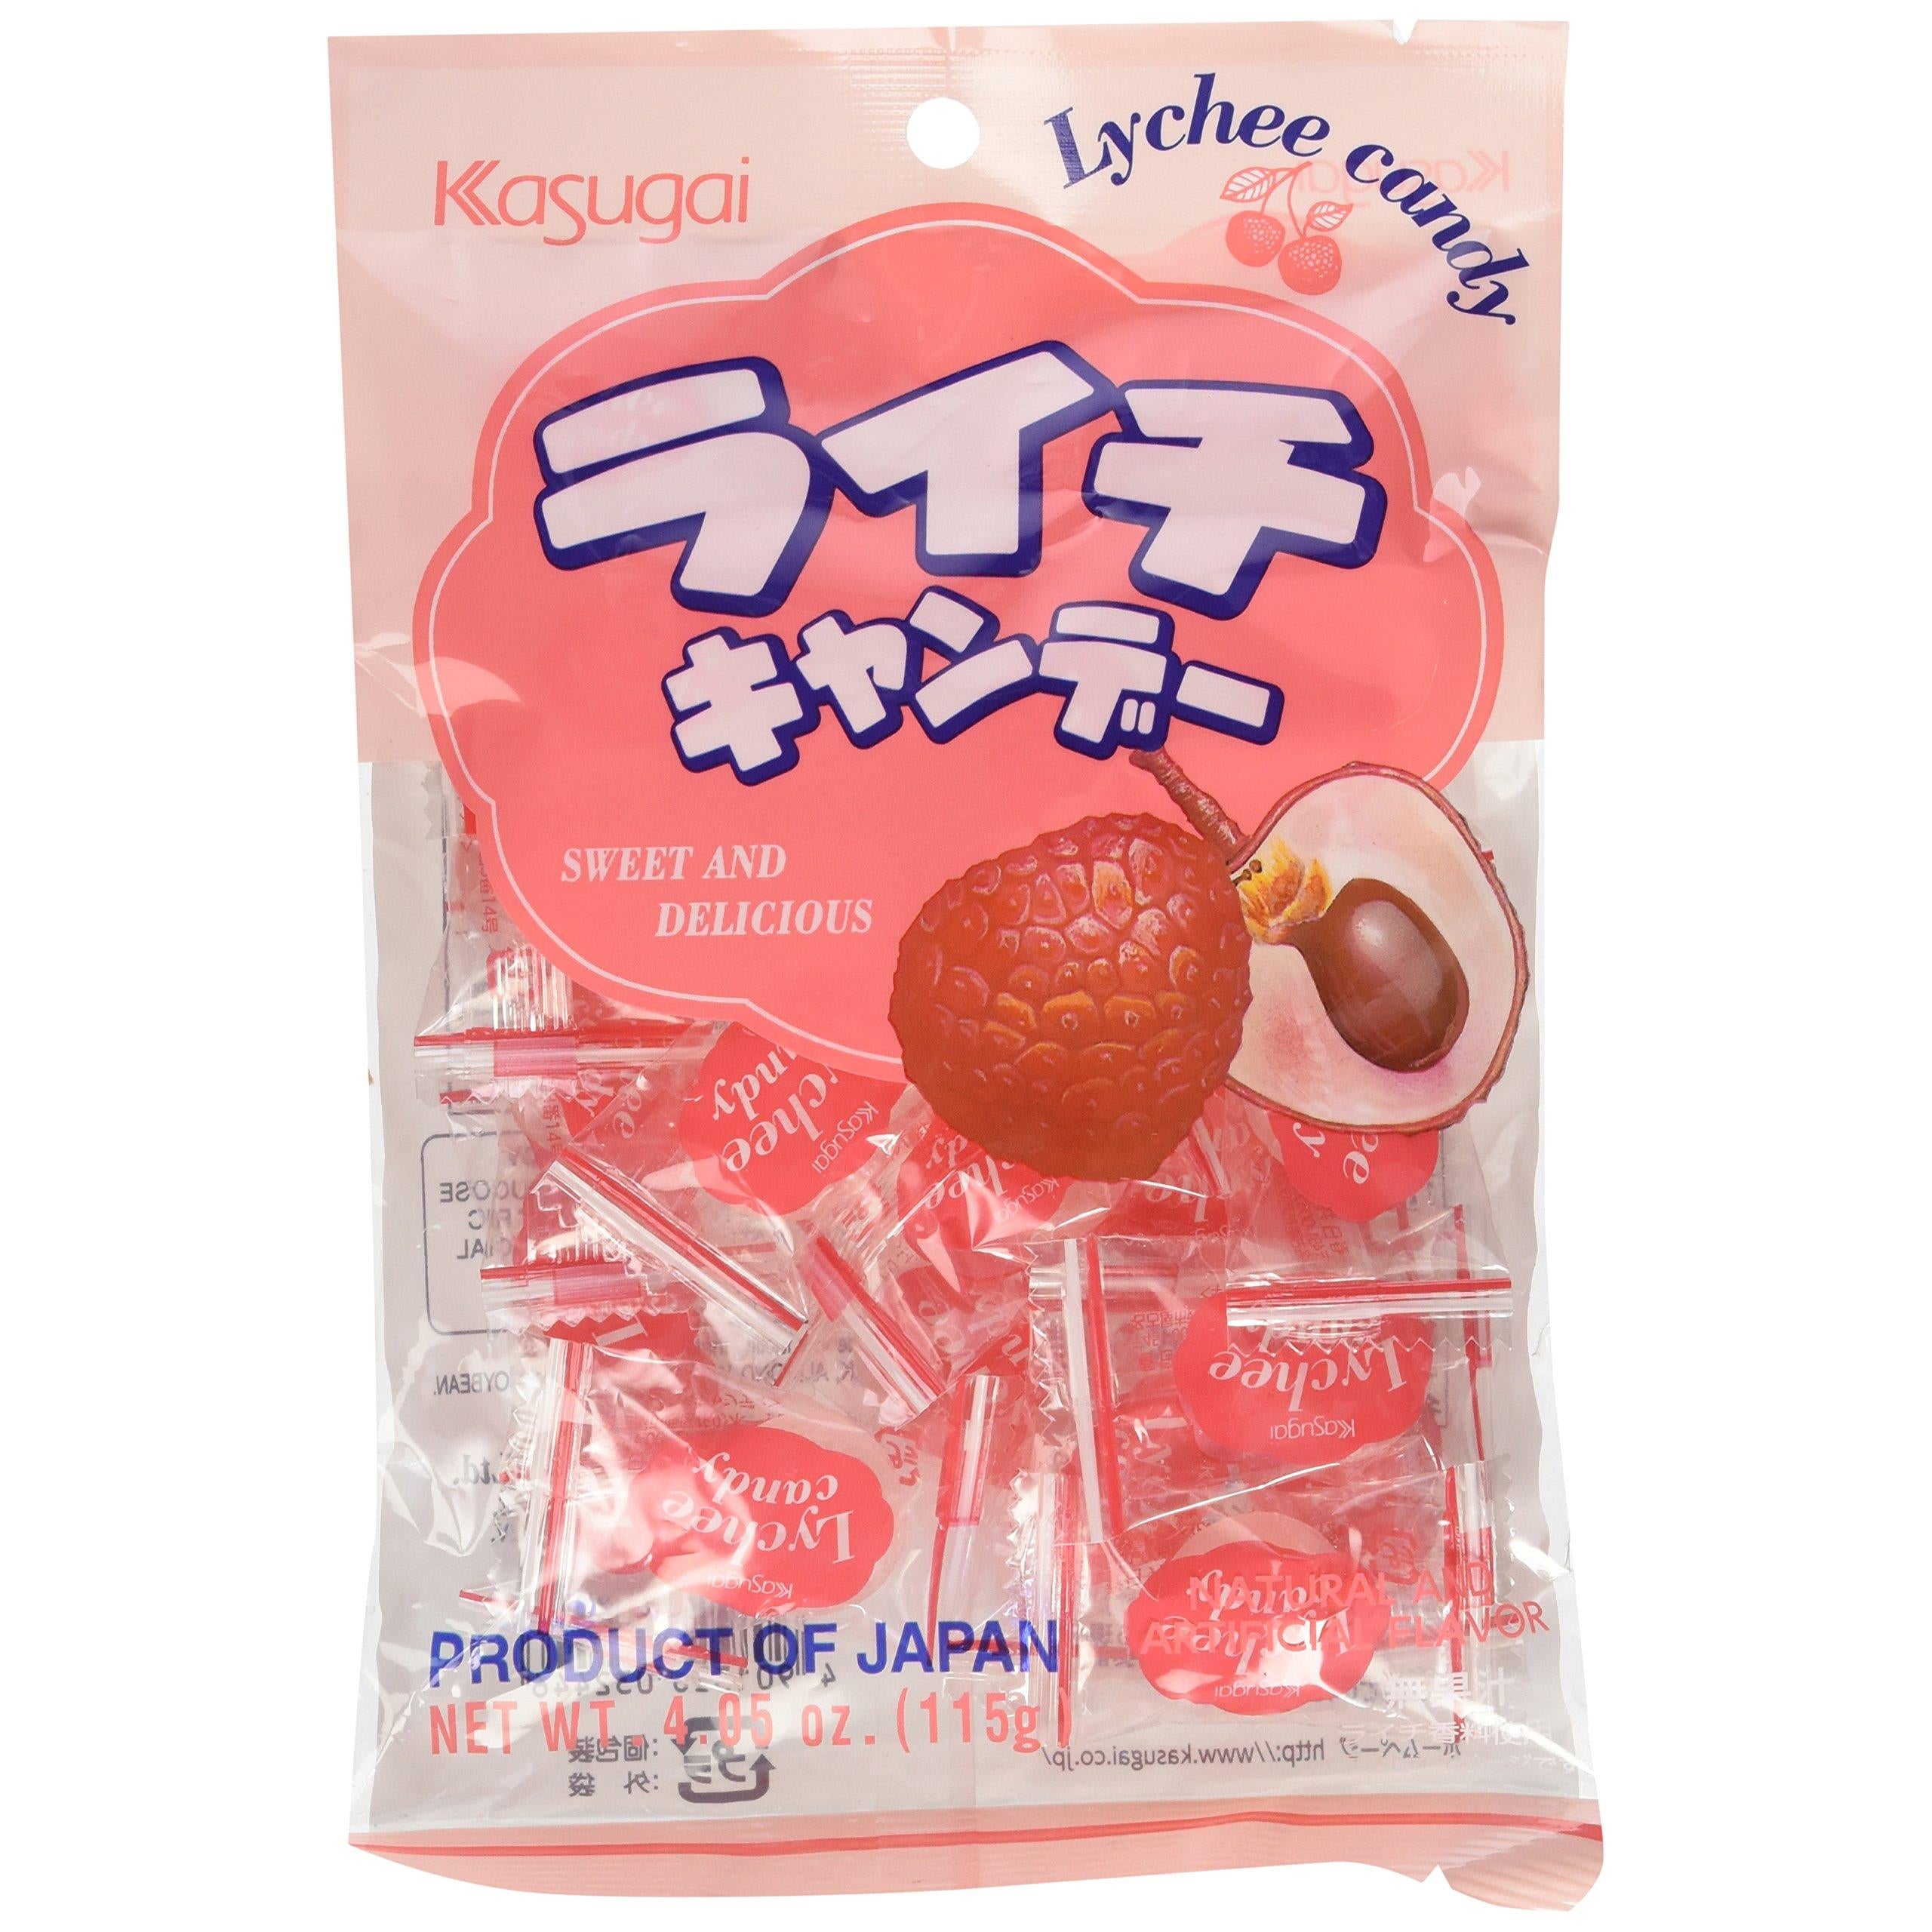 Kasugai - Lychee Candy 4.05 oz.